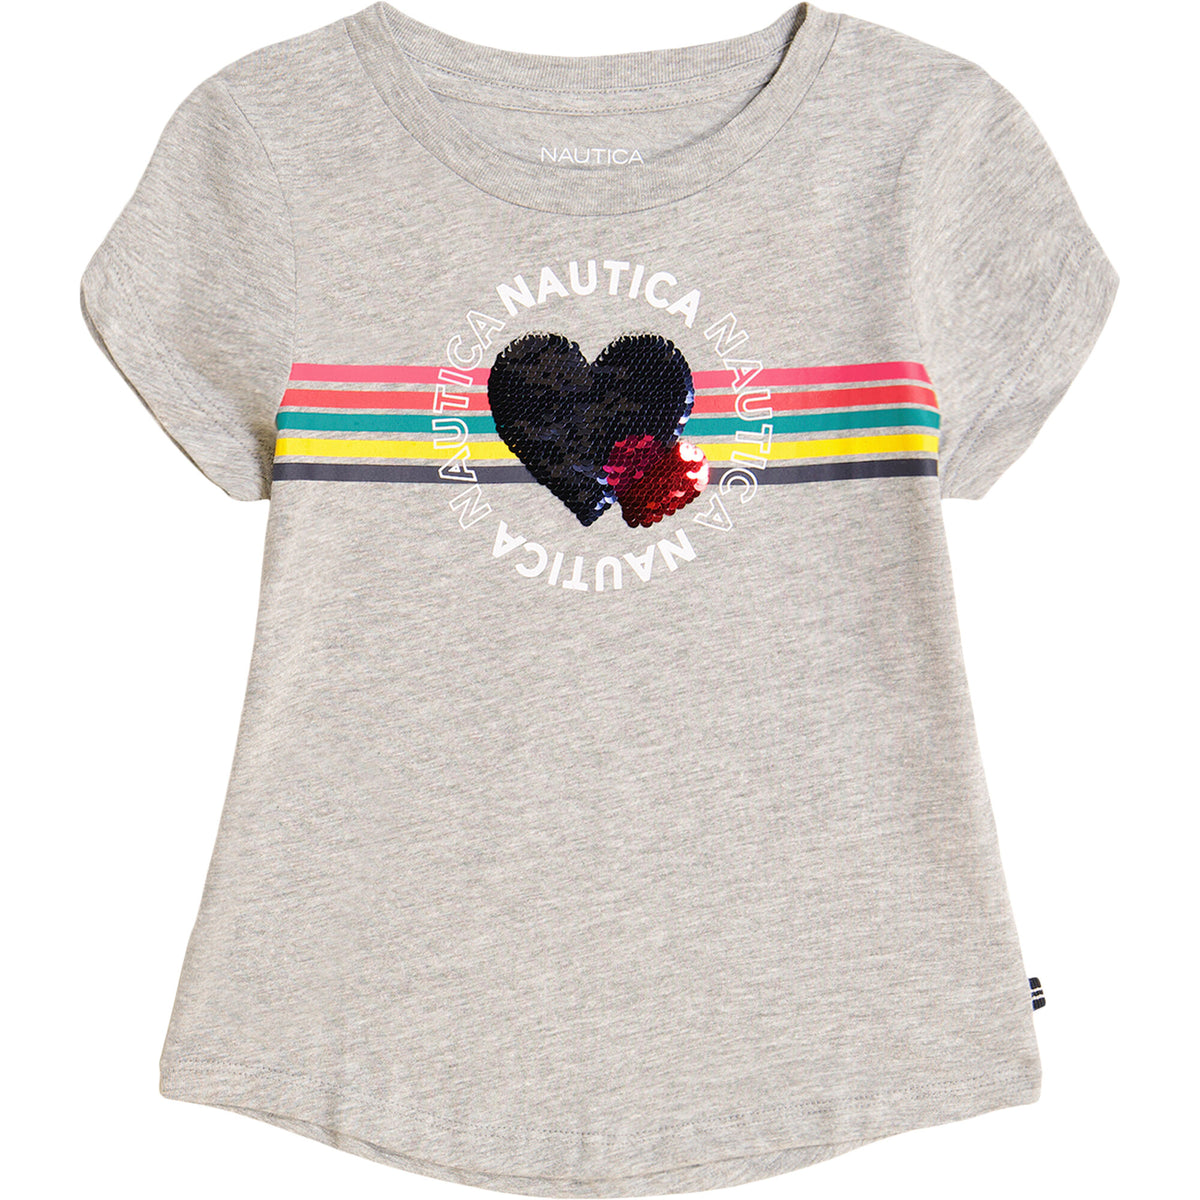 Nautica Toddler Girls' Linked Heart T-Shirt (2T-4T) Grey Heather